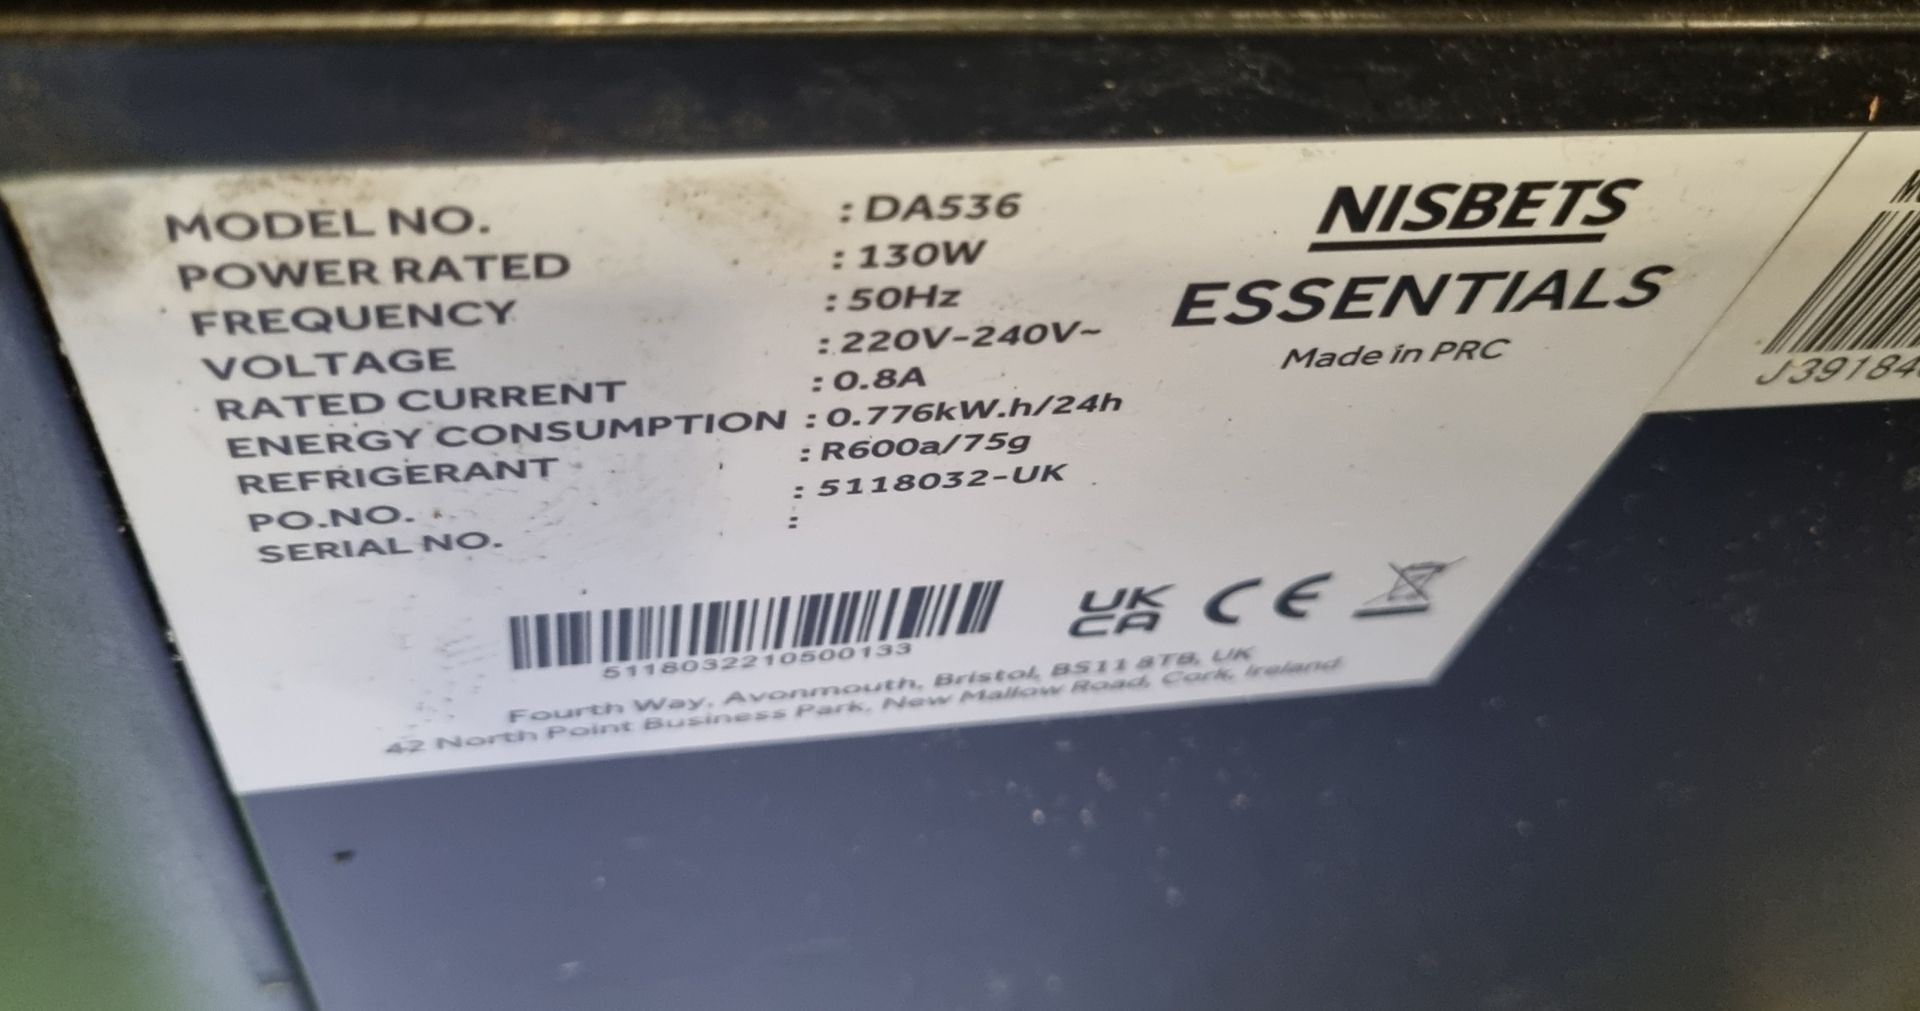 Nisbets DA536 chest freezer - black - W 1120 x D 660 x H 830mm - Image 5 of 5